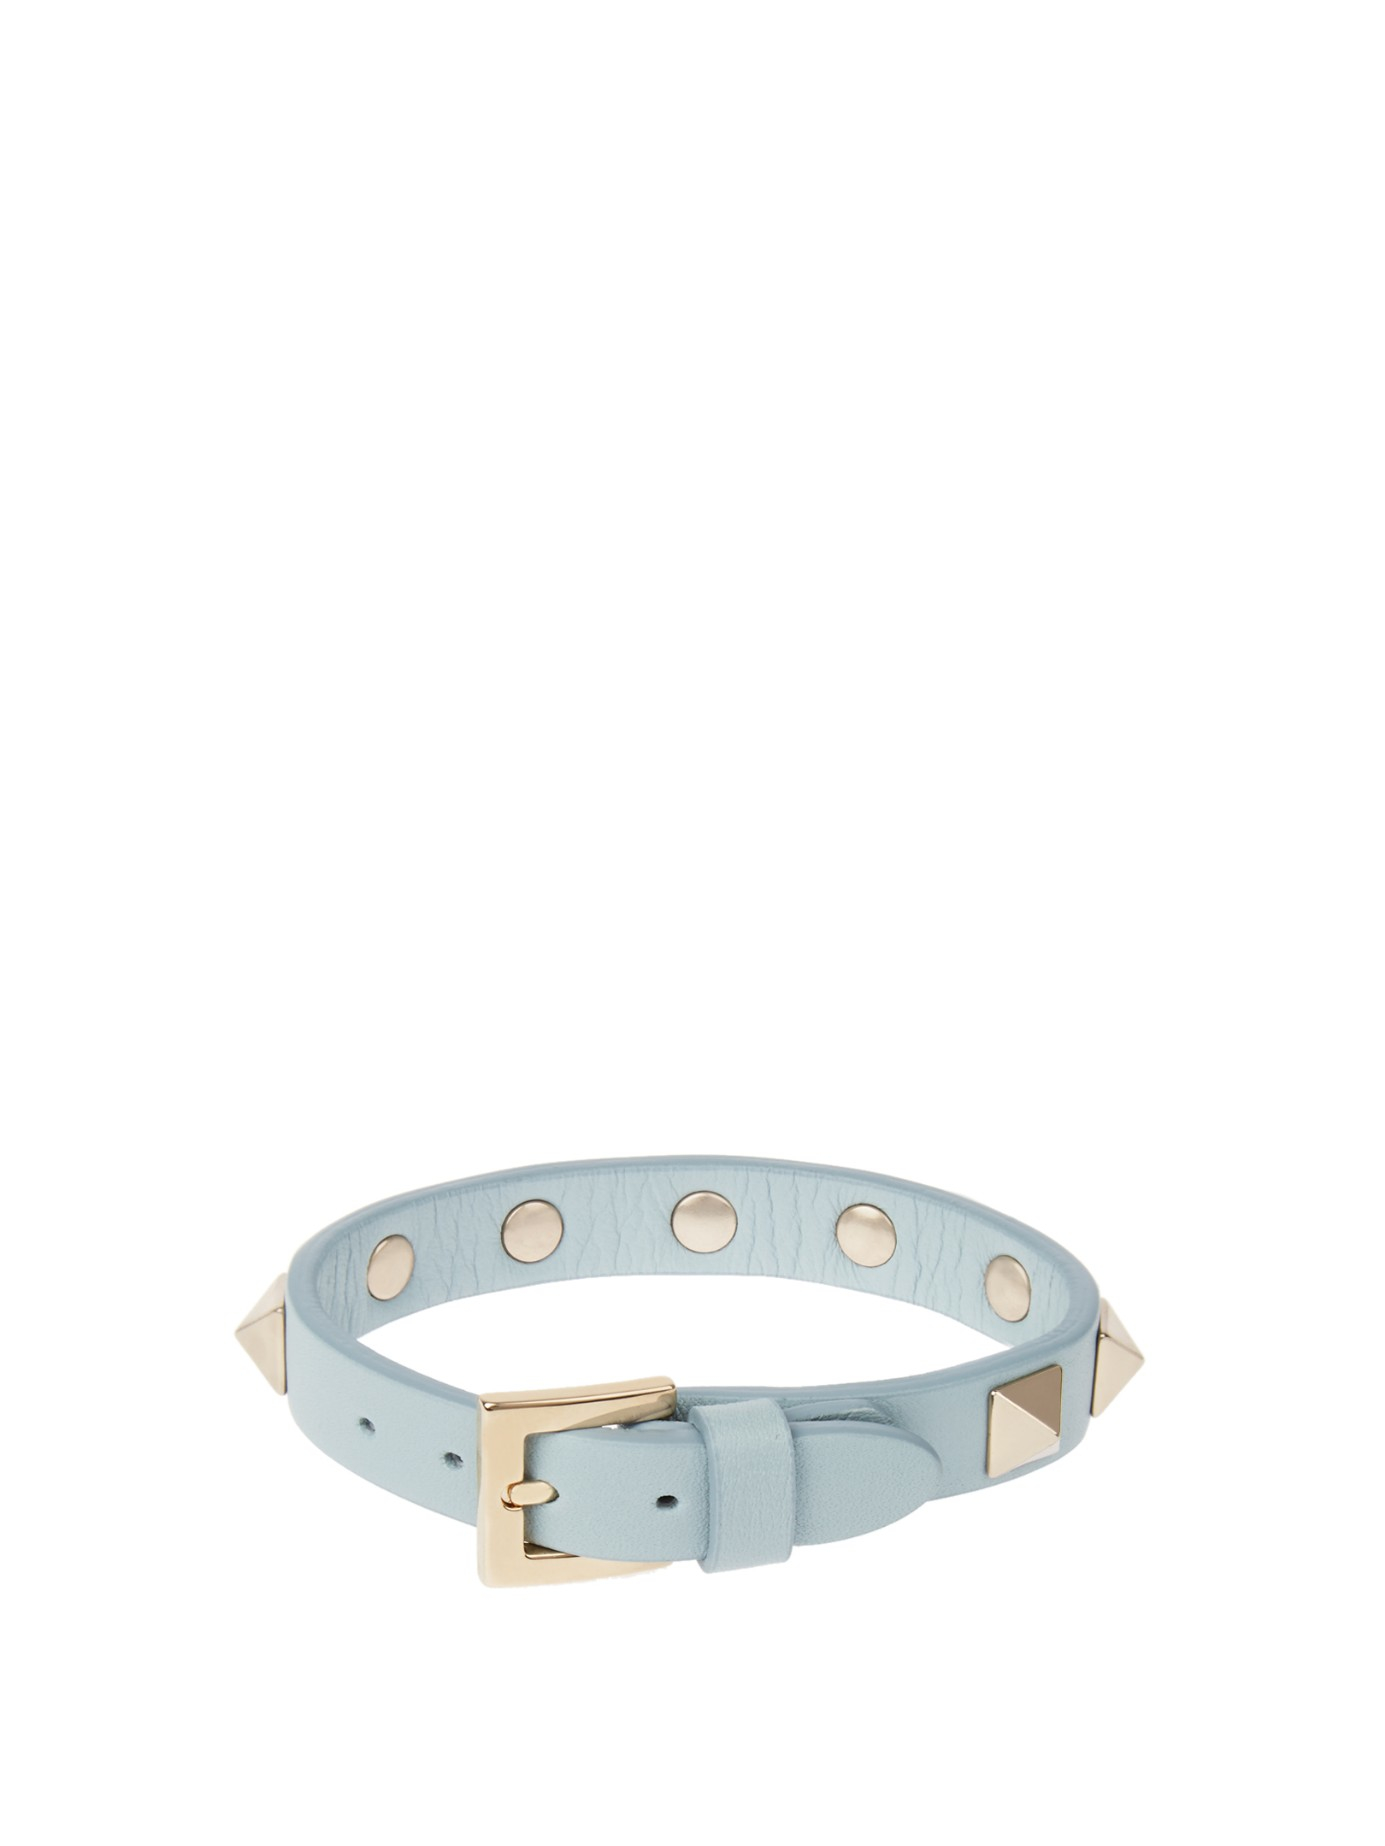 Valentino Rockstud Leather Bracelet in Light Blue (Blue) - Lyst